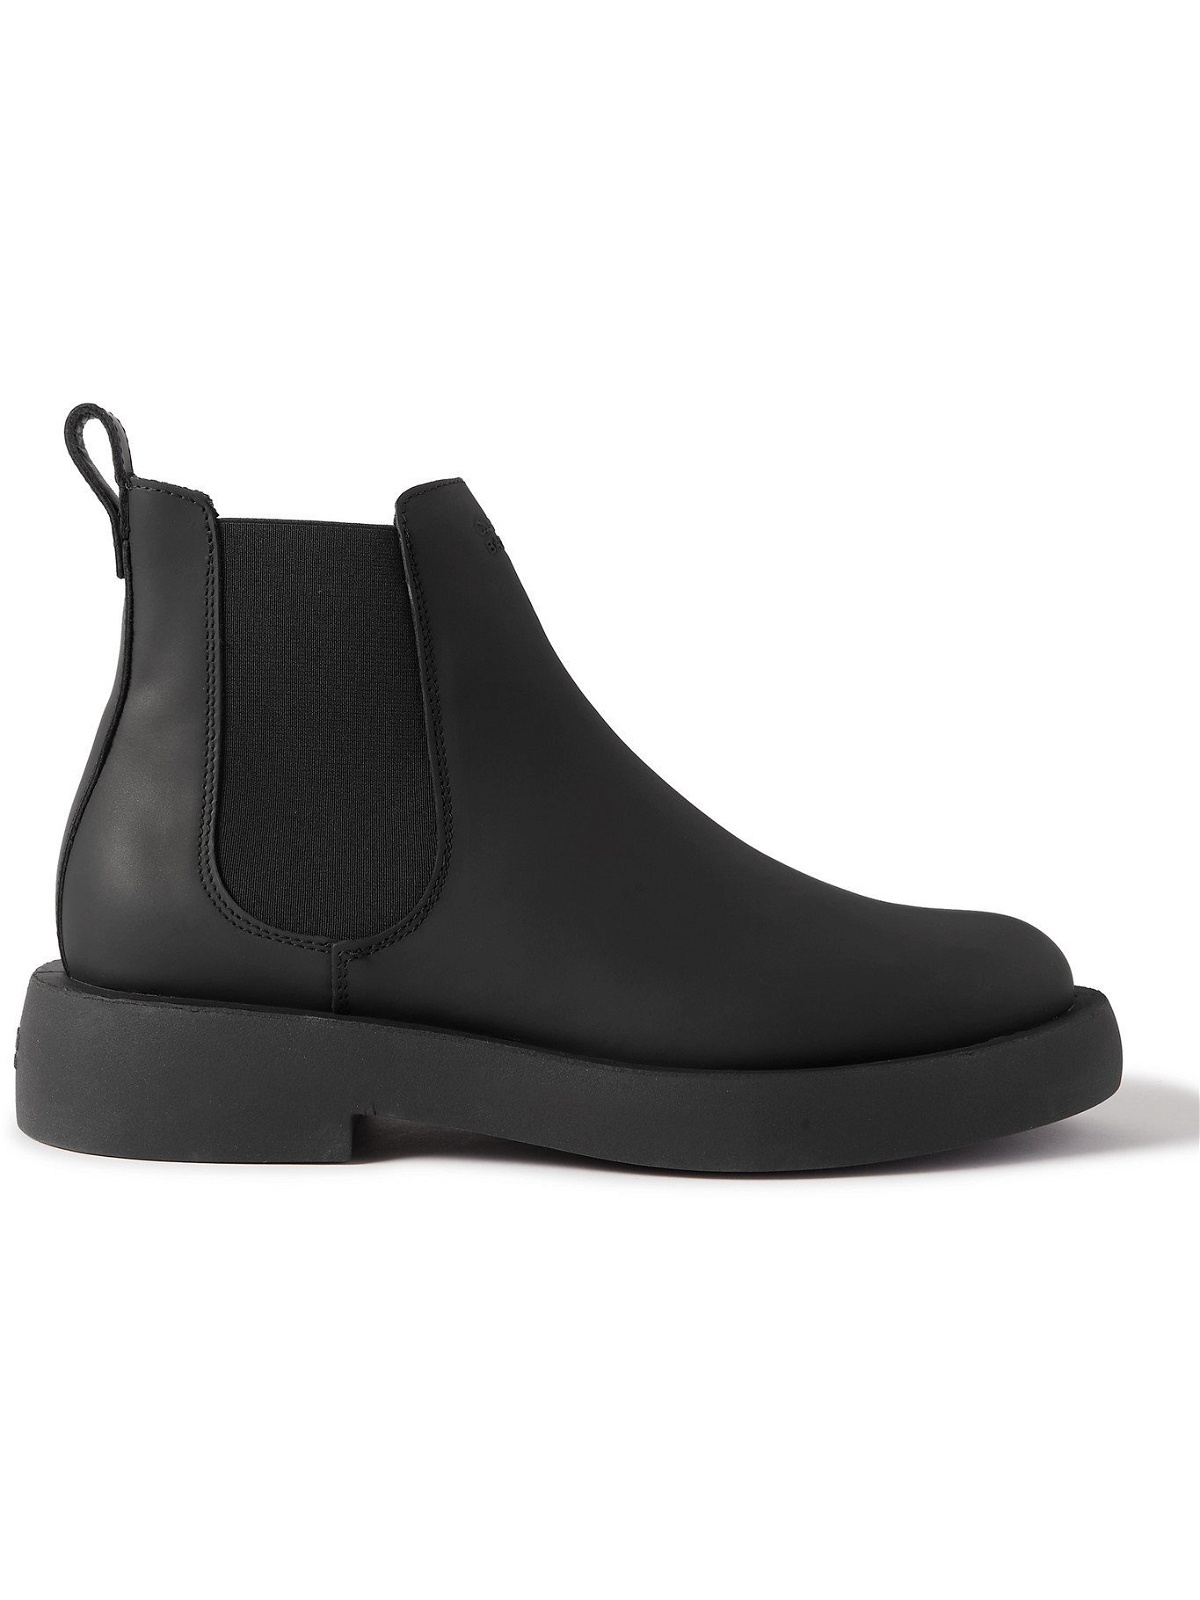 Photo: CLARKS ORIGINALS - Mileno Leather Chelsea Boots - Black - UK 7.5